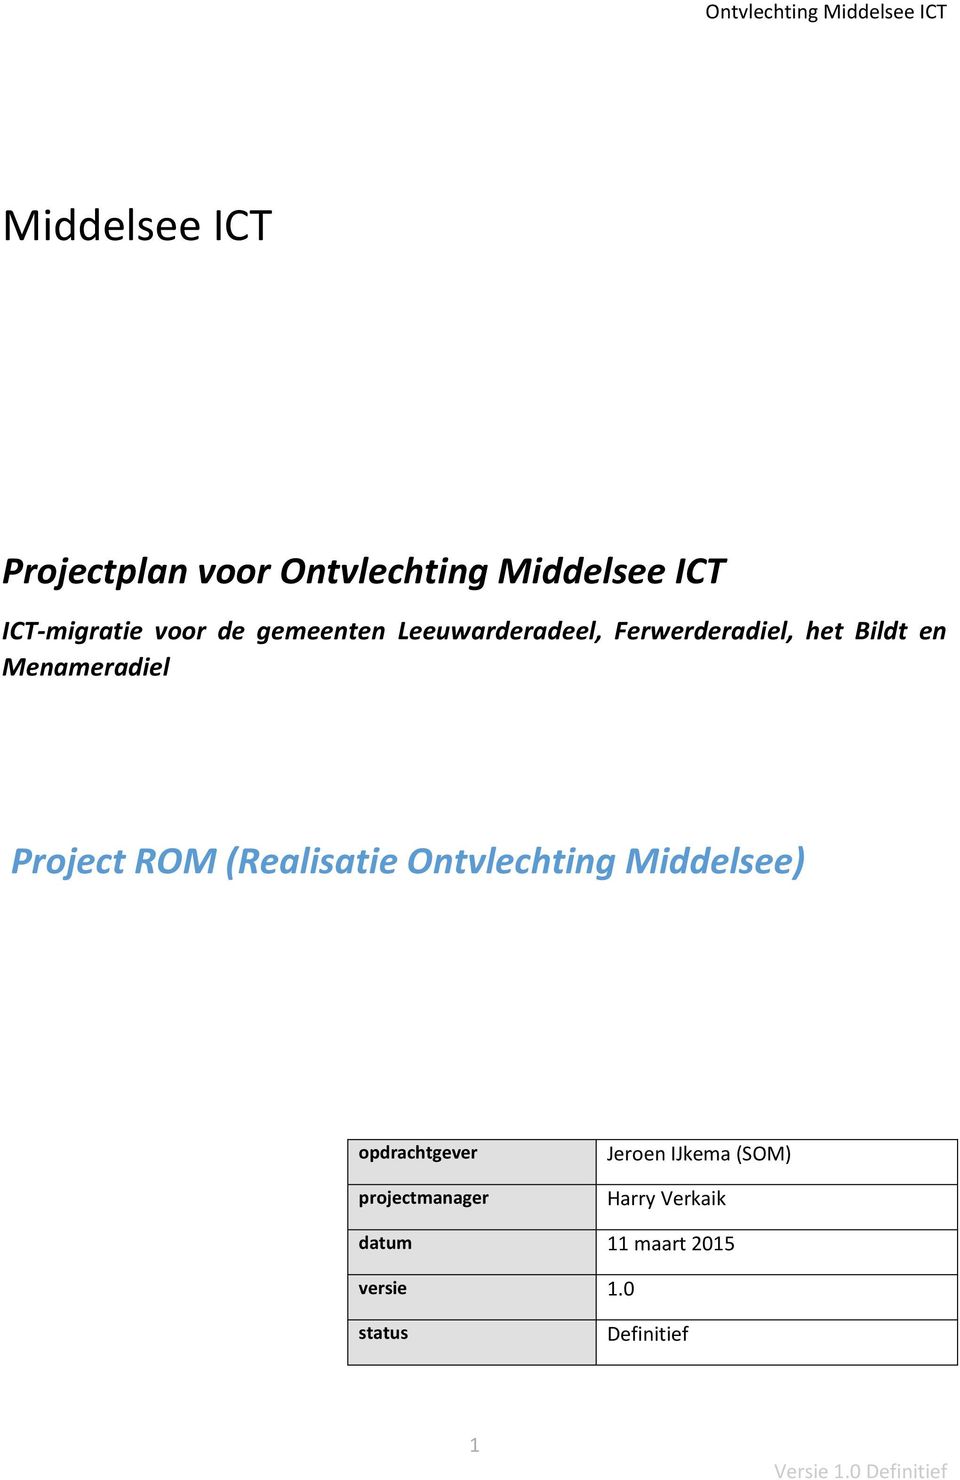 Project ROM (Realisatie Ontvlechting Middelsee) opdrachtgever projectmanager